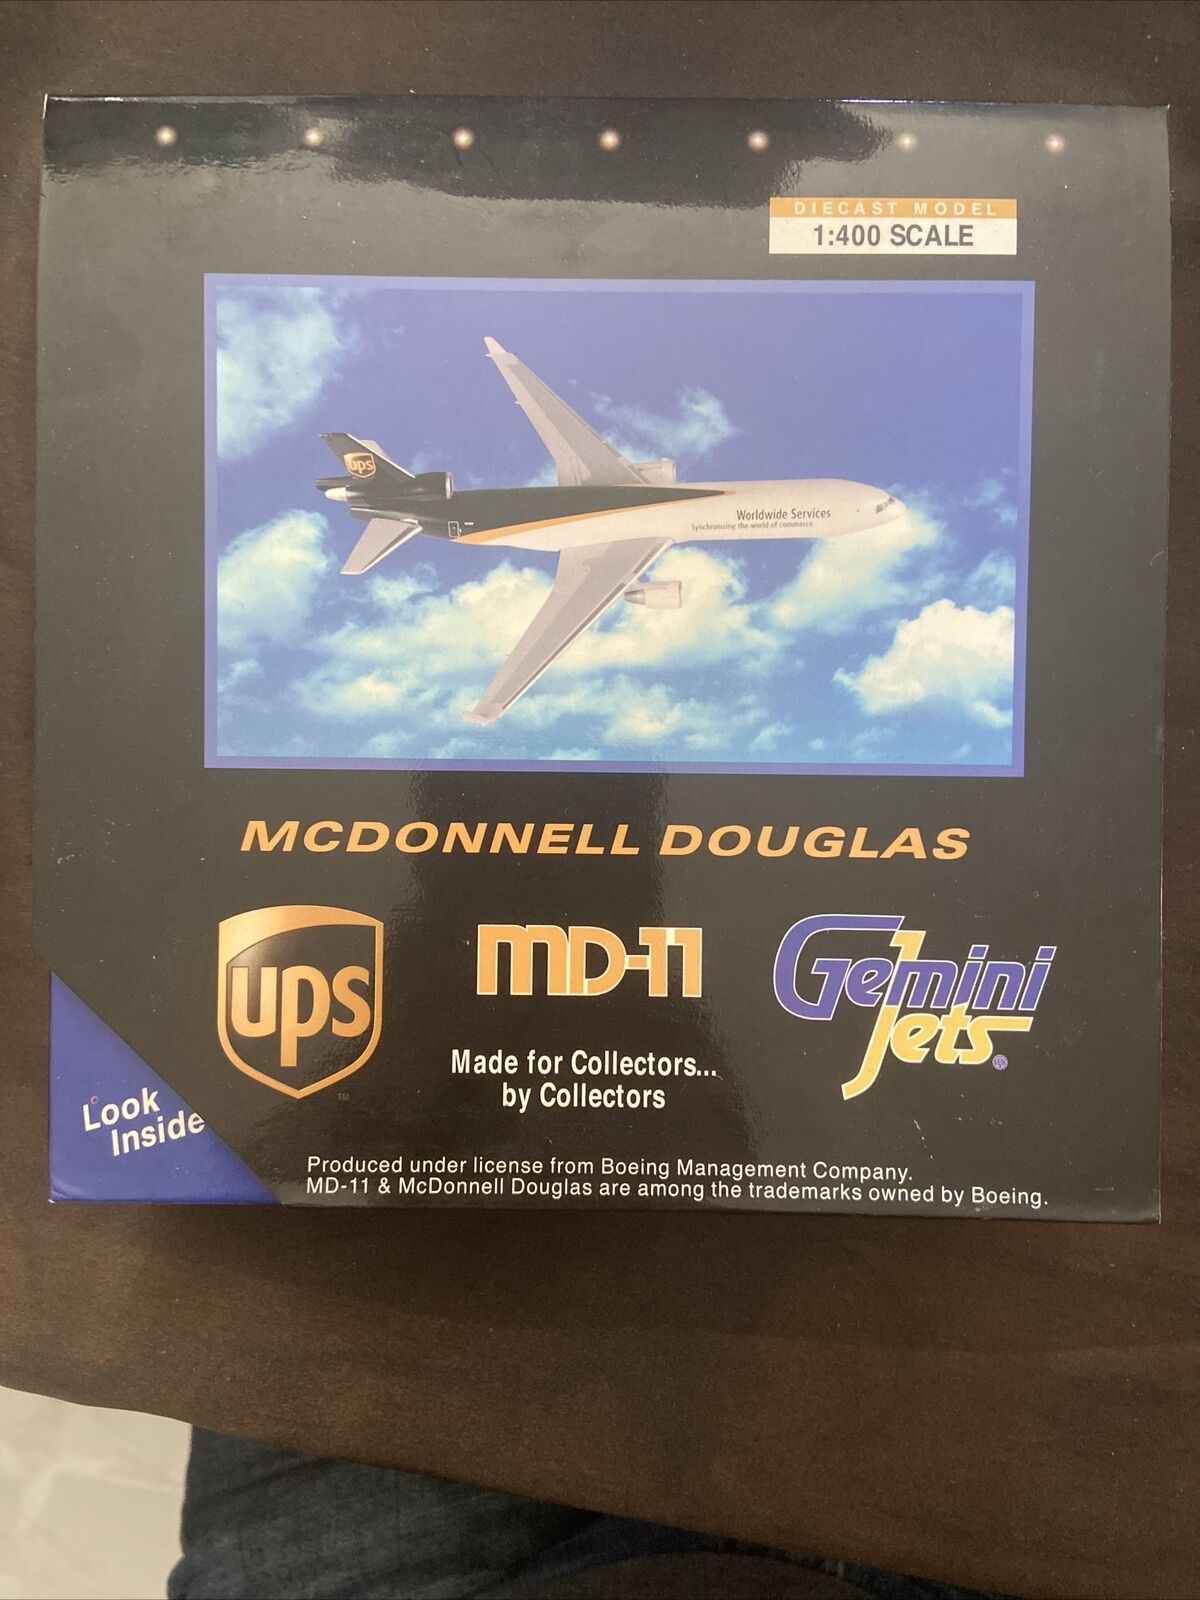 Gemini Jets 1:400 Scale UPS McDonnell Douglas MD-11 Reg # N270UP